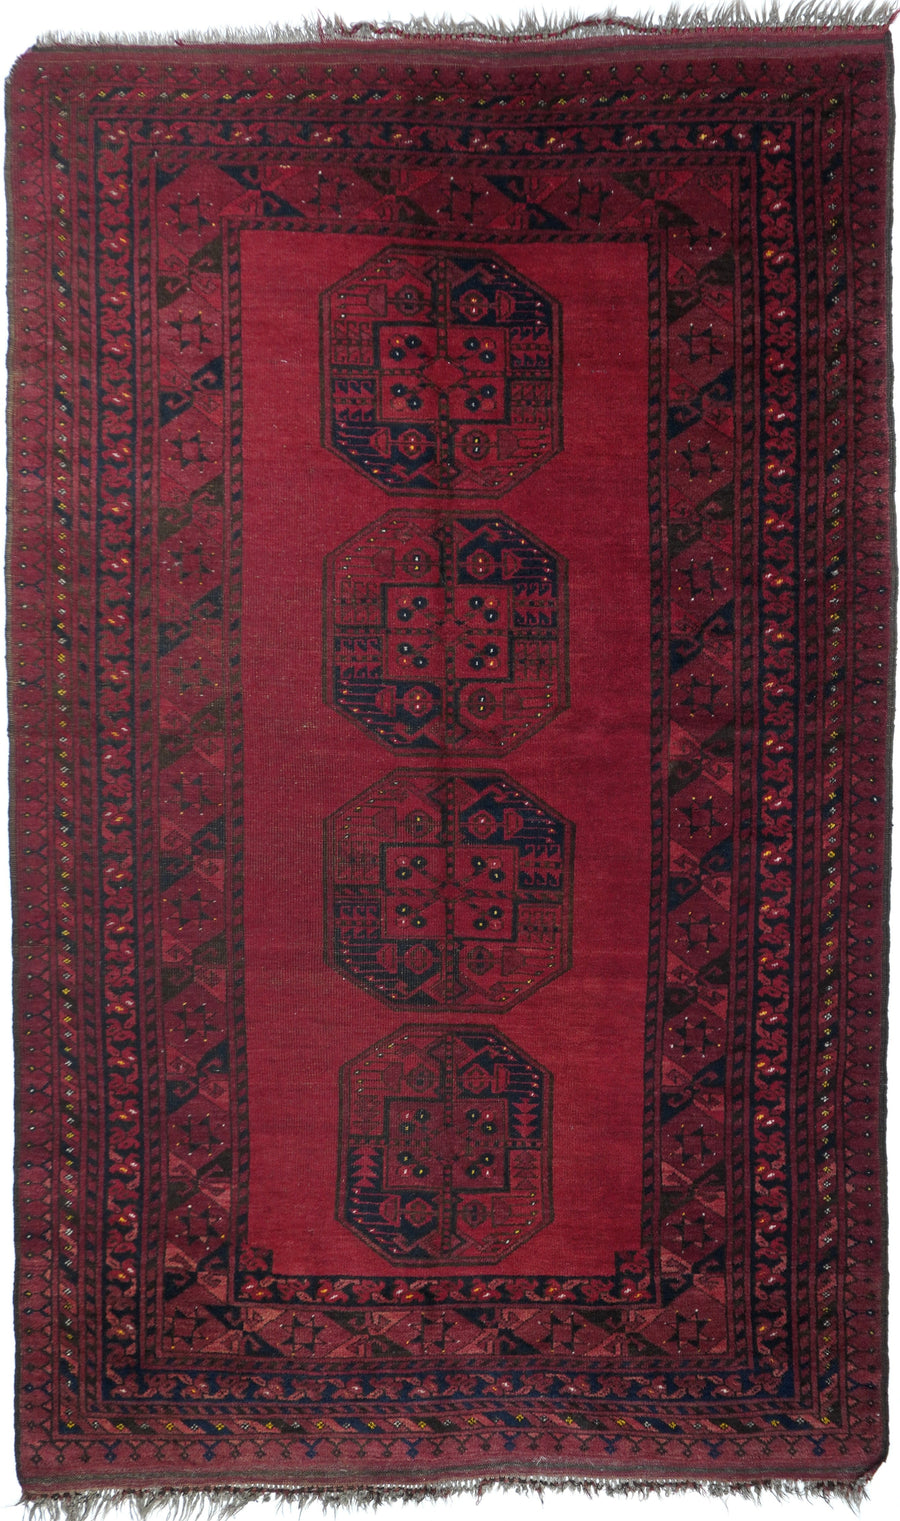 Antique Afghan Rug 5' x 8'2''